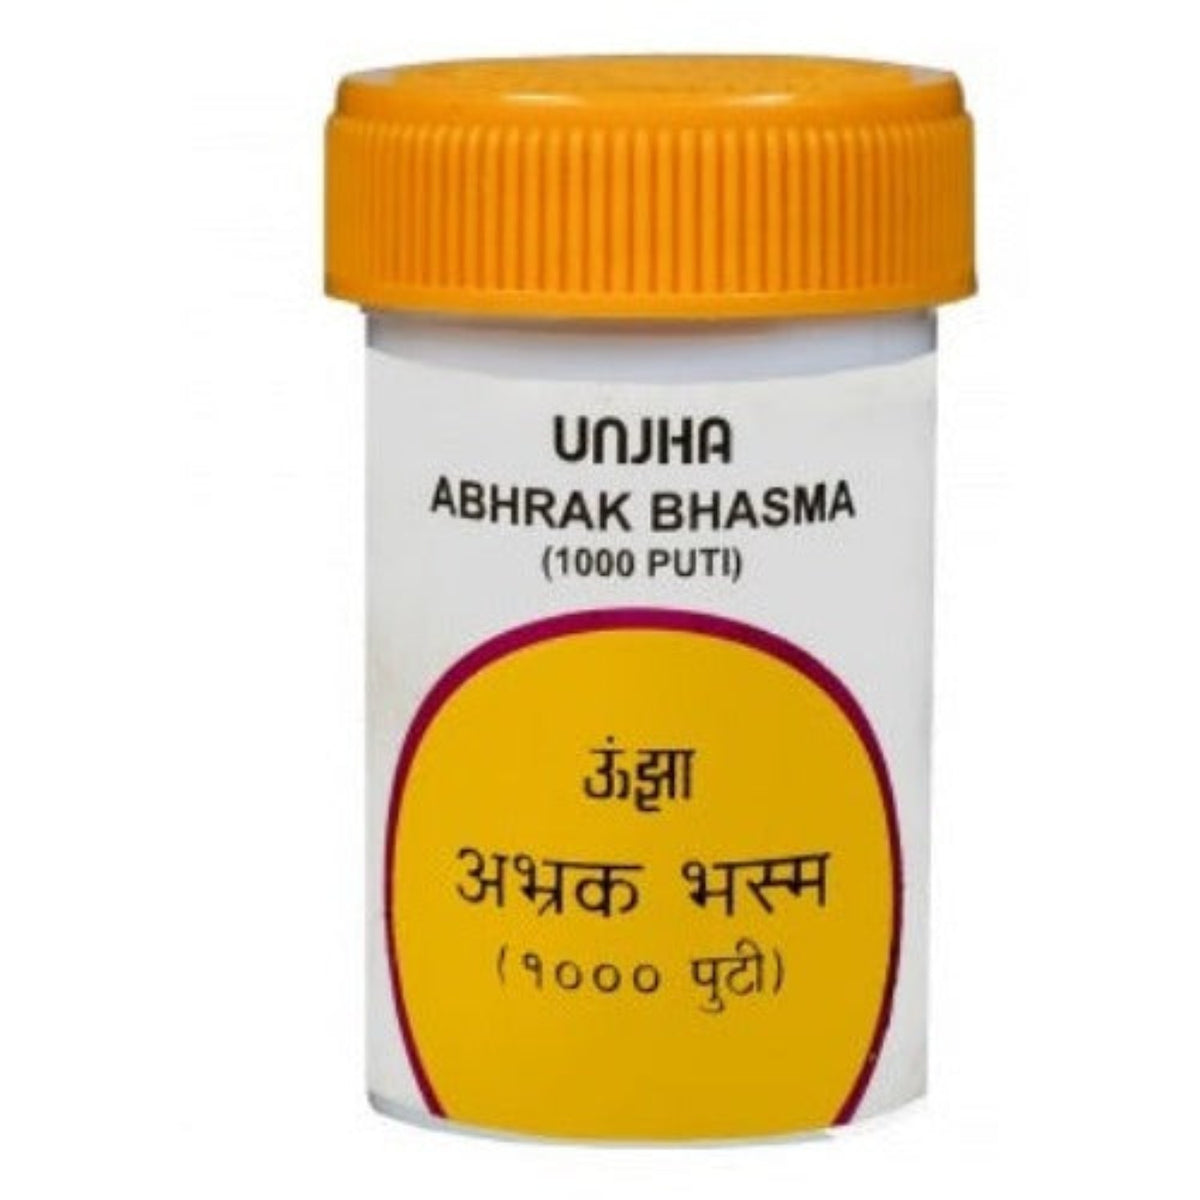 Unjha Ayurvedic Abhrak Boost Energy Bhasma (1000 Puti) Powder